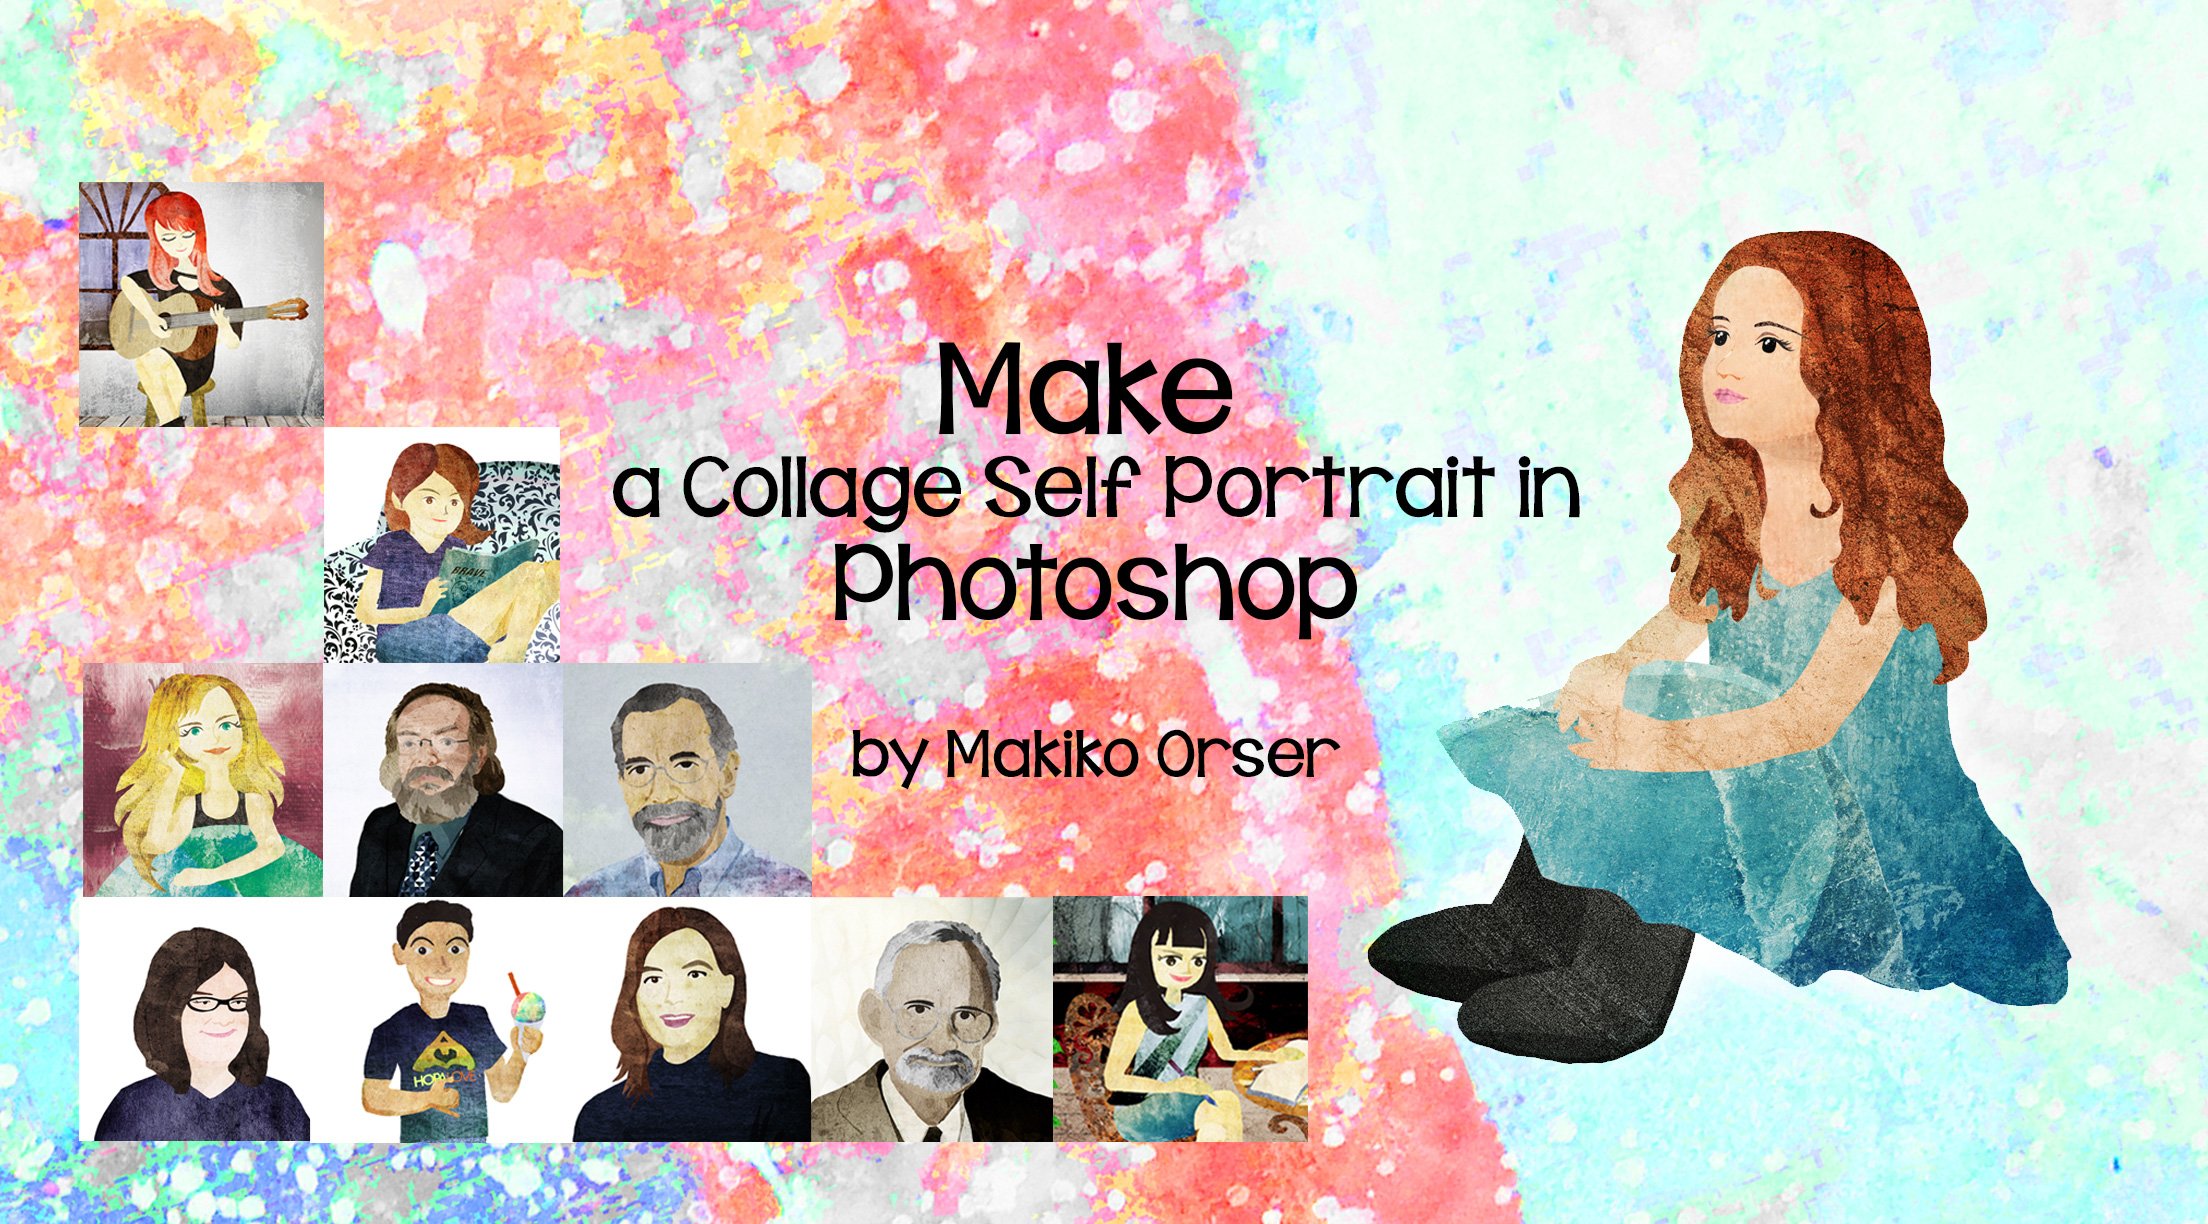 Make a Collage Self Portrait in Photoshop